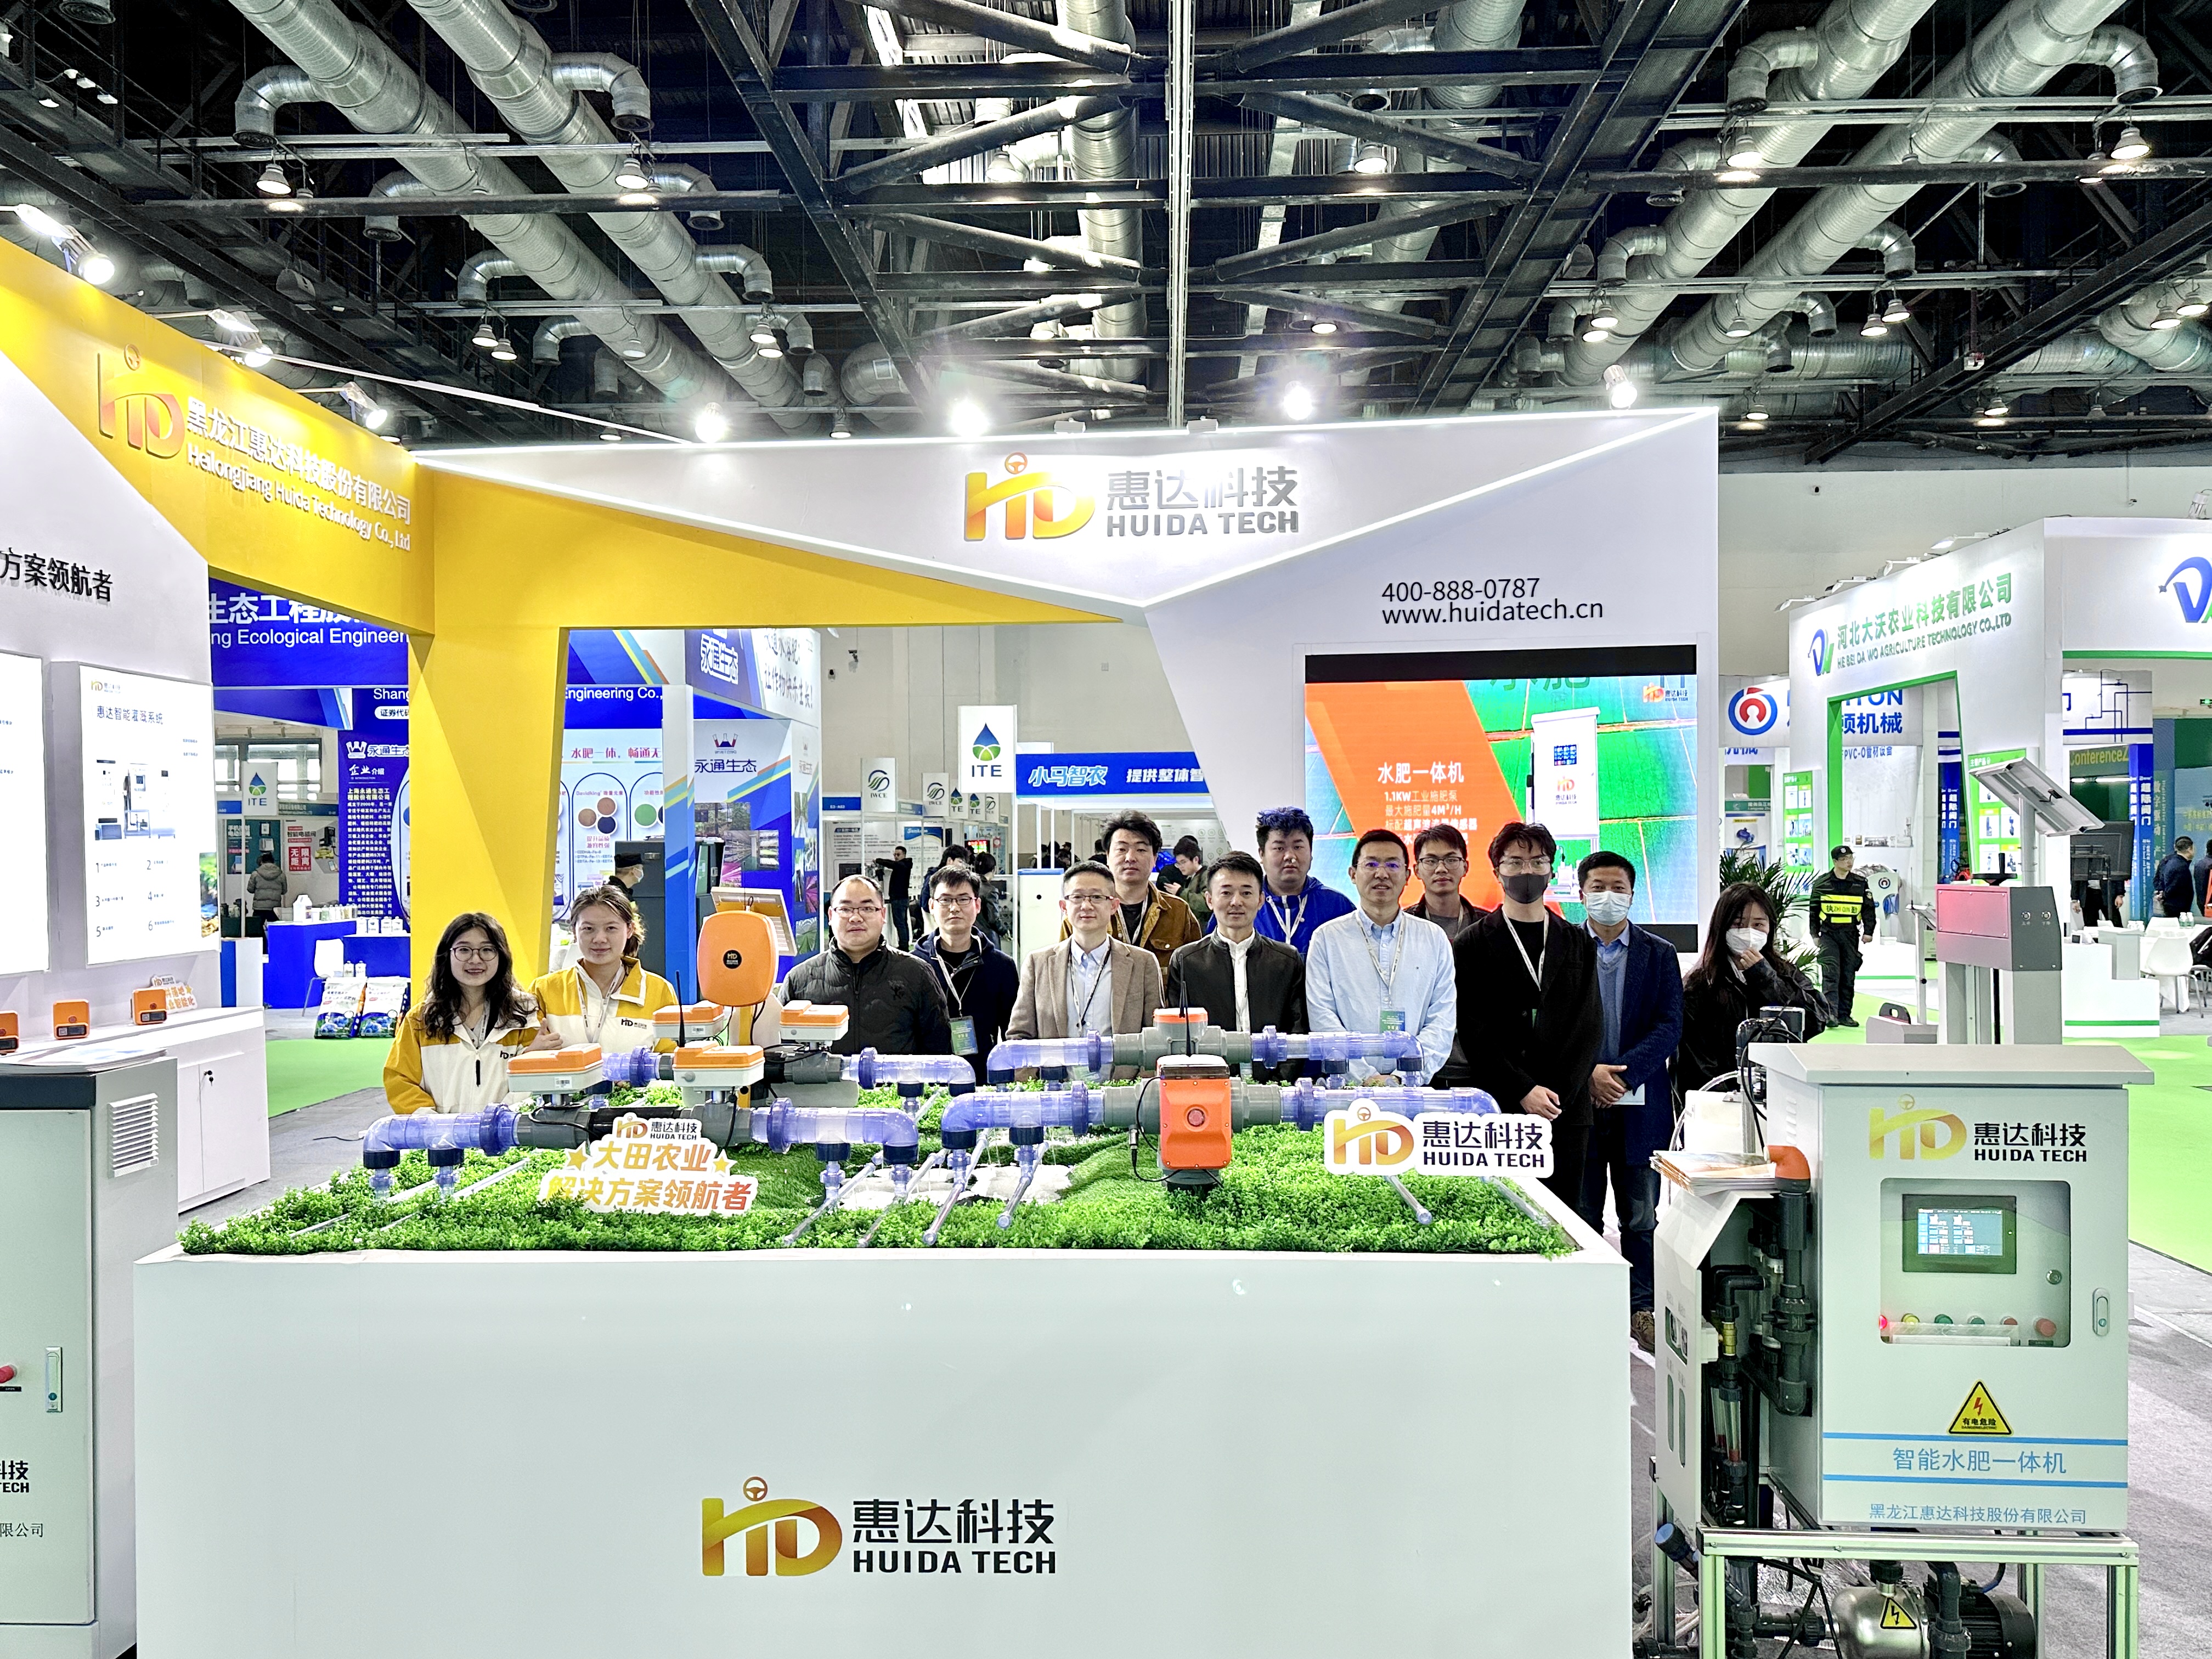 The 10th Beijing International Irrigation Technology Expo